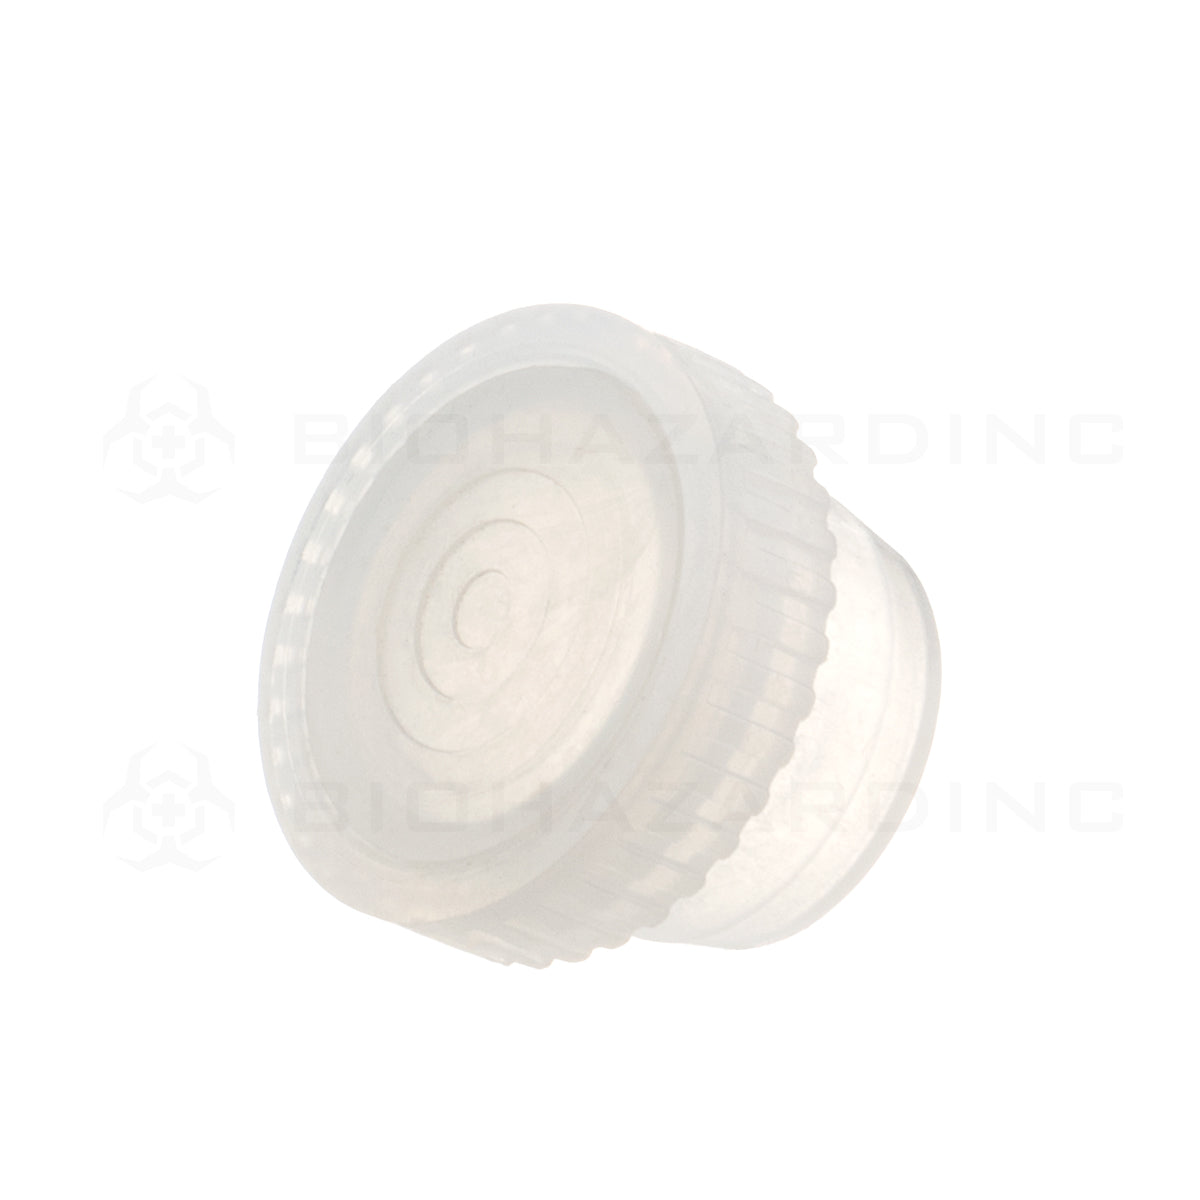 Plastic Cap | Plastic Stopper | 12mm - Clear Cap Biohazard Inc   